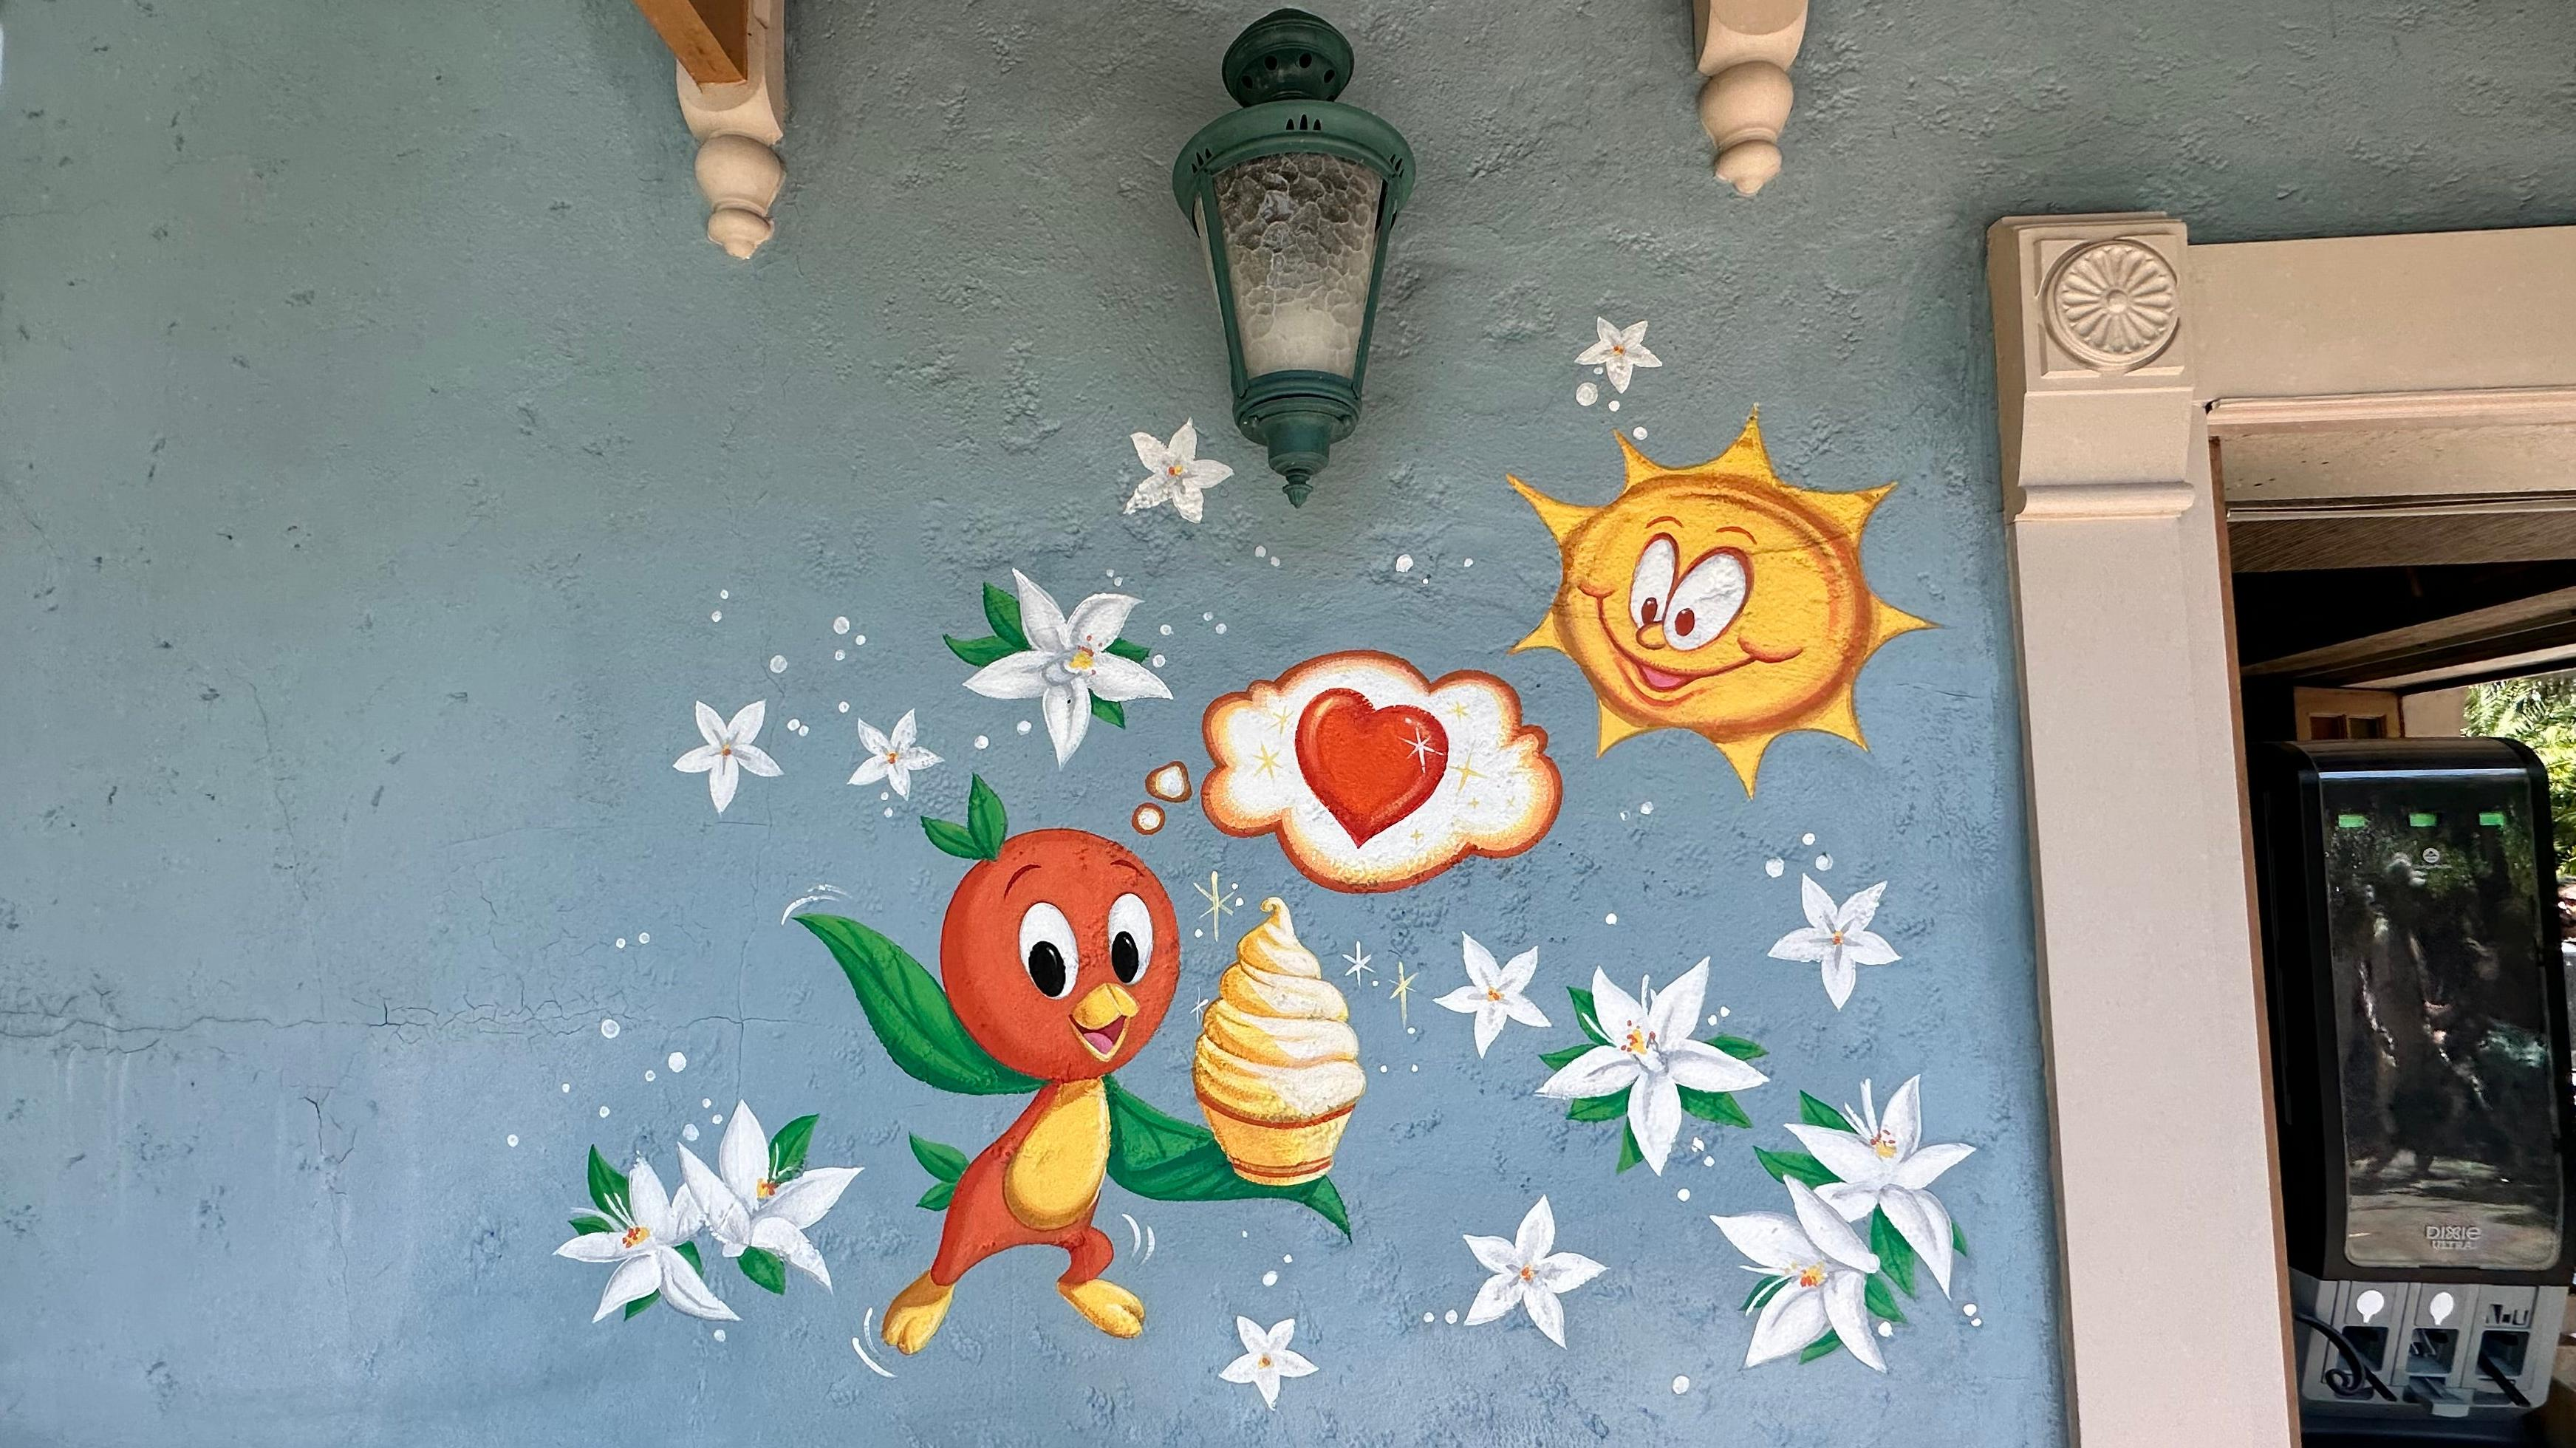 Painting of Orange Bird smiling with an Orange Cream treat